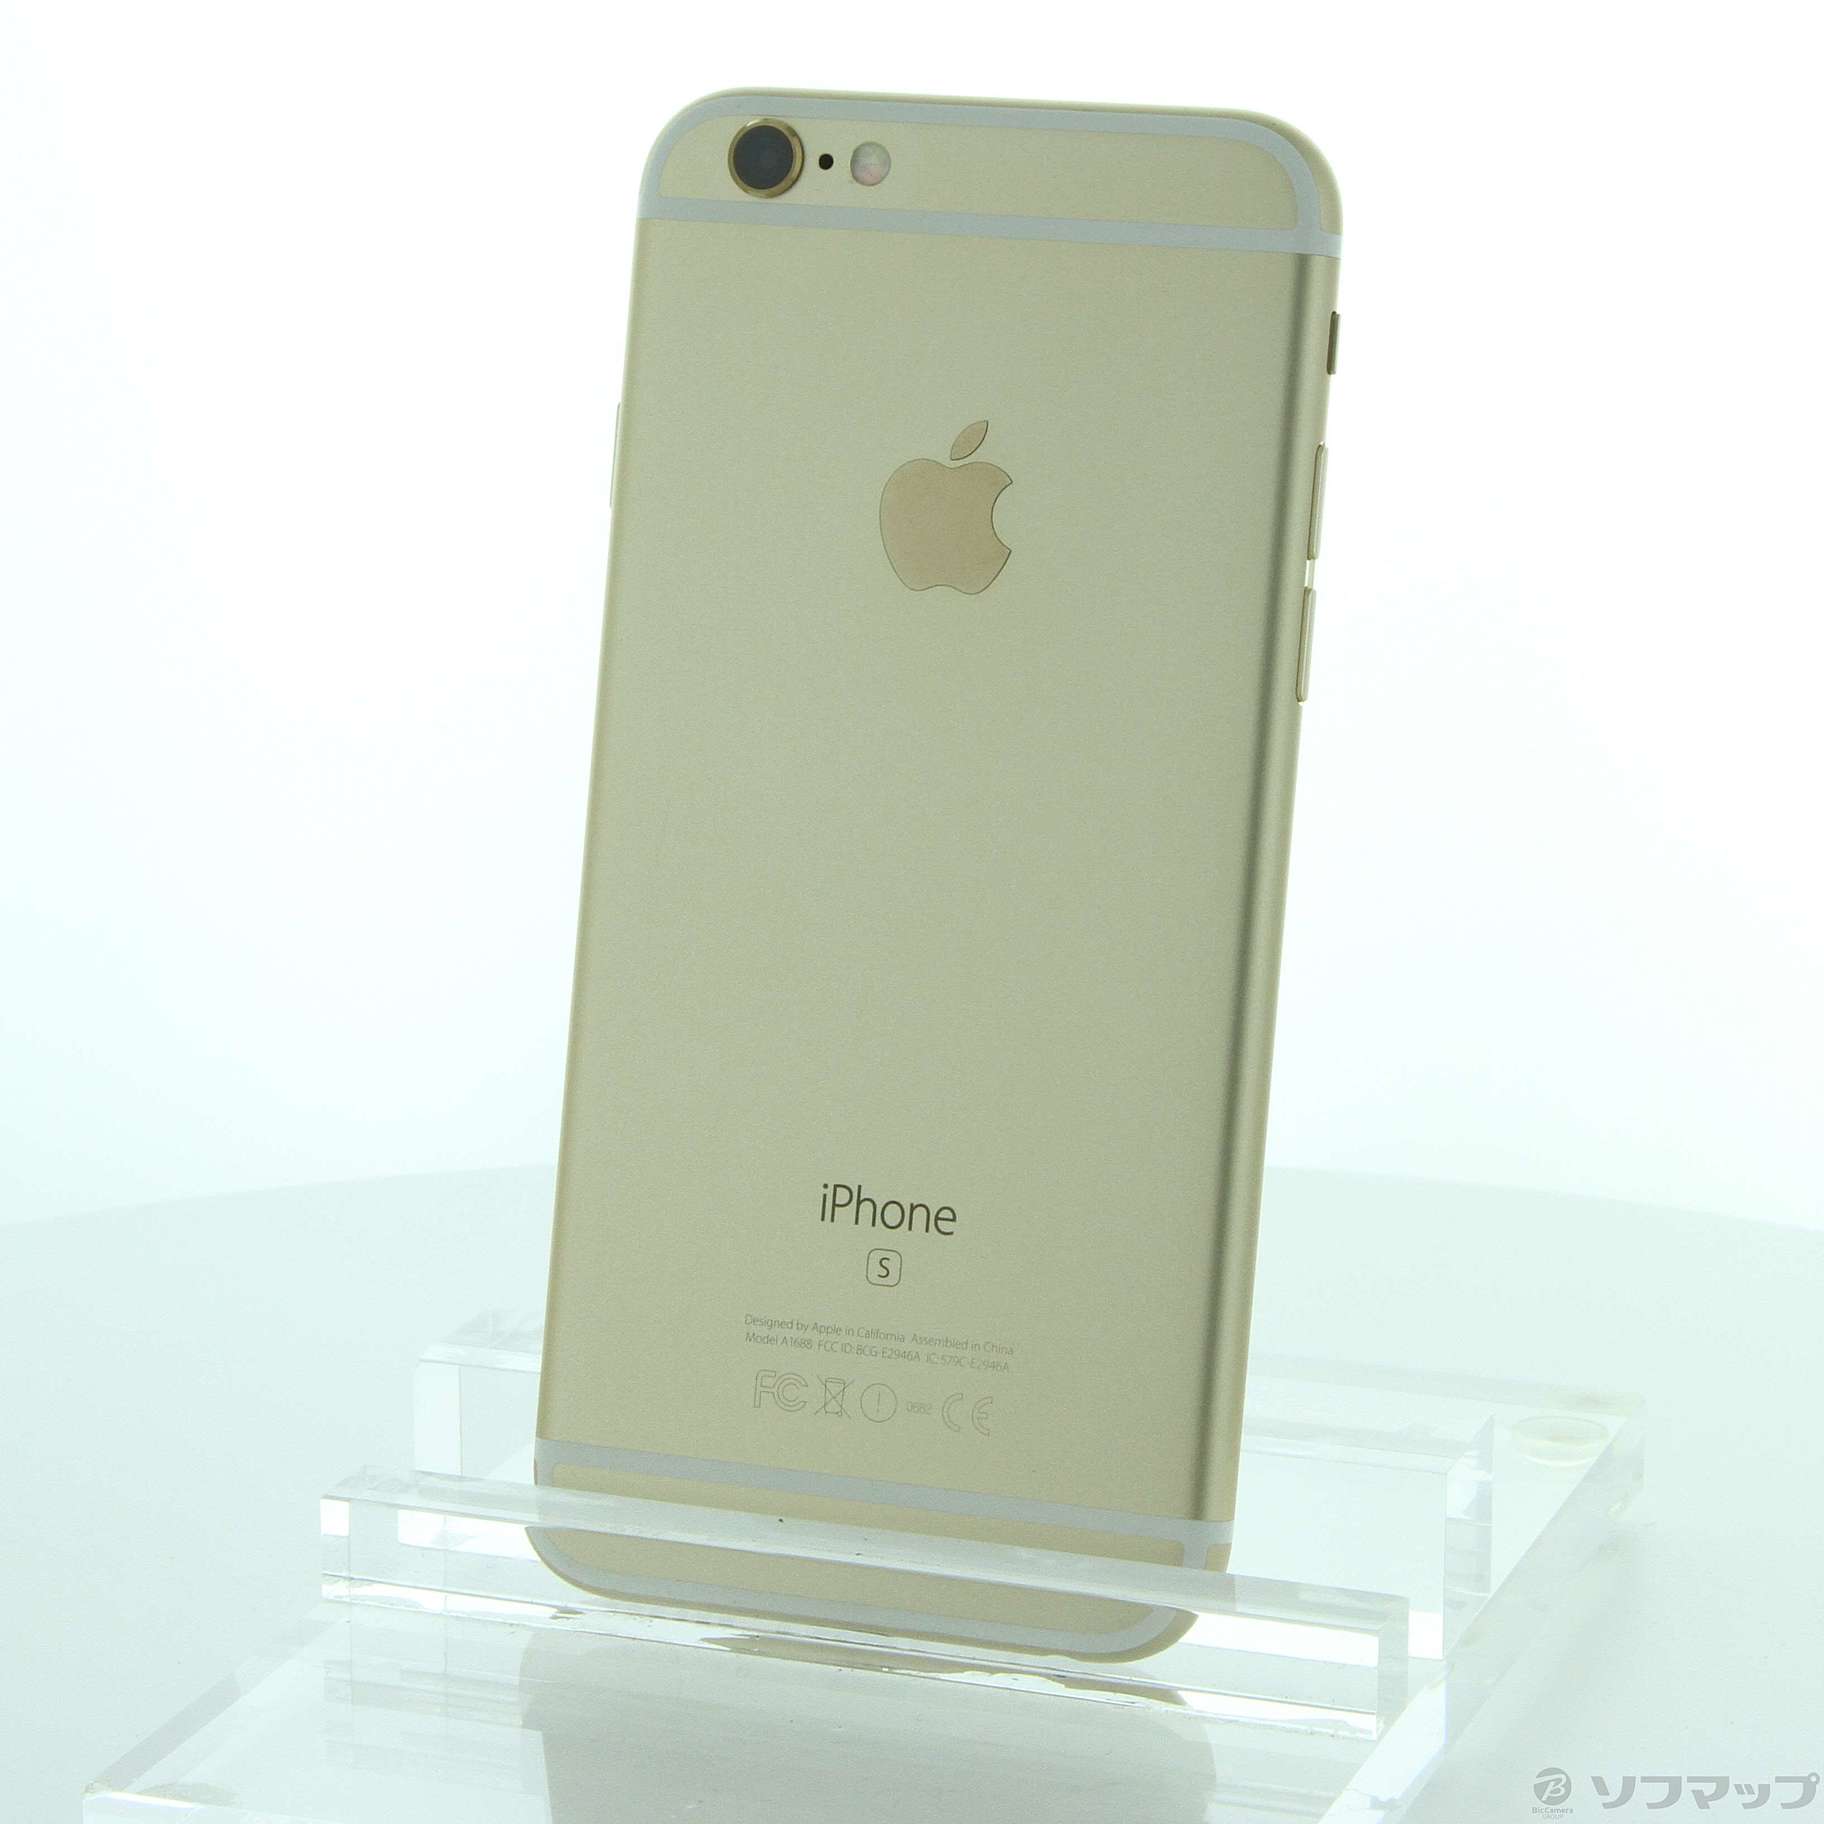 iPhone 6s 32gb 新品 ゴールド simフリー 最終値下げ